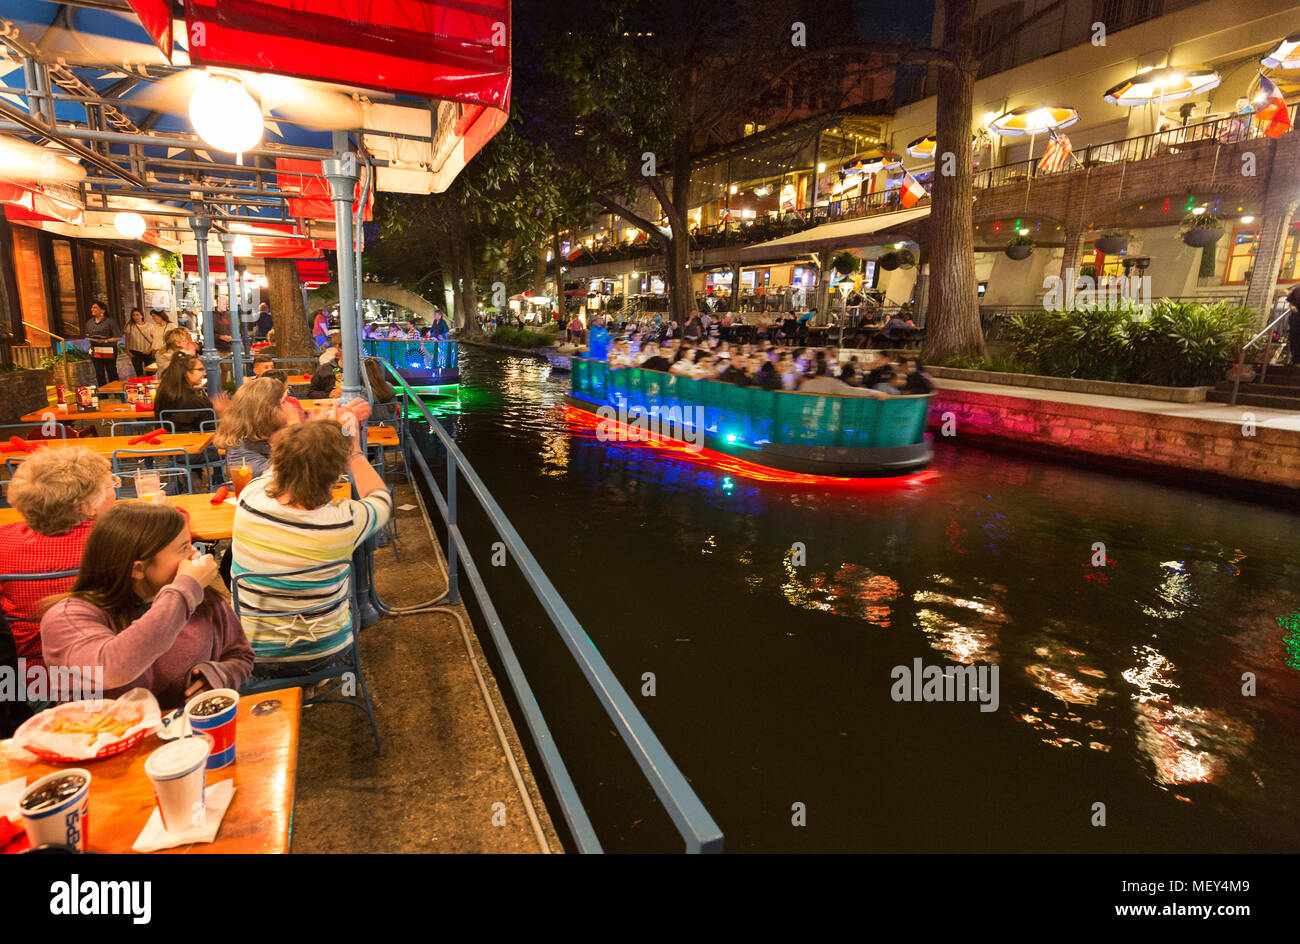 San Antonio Texas - San Antonio River Walk at night - people in restaurants and on boats; San Antonio, Texas USA Stock Photo